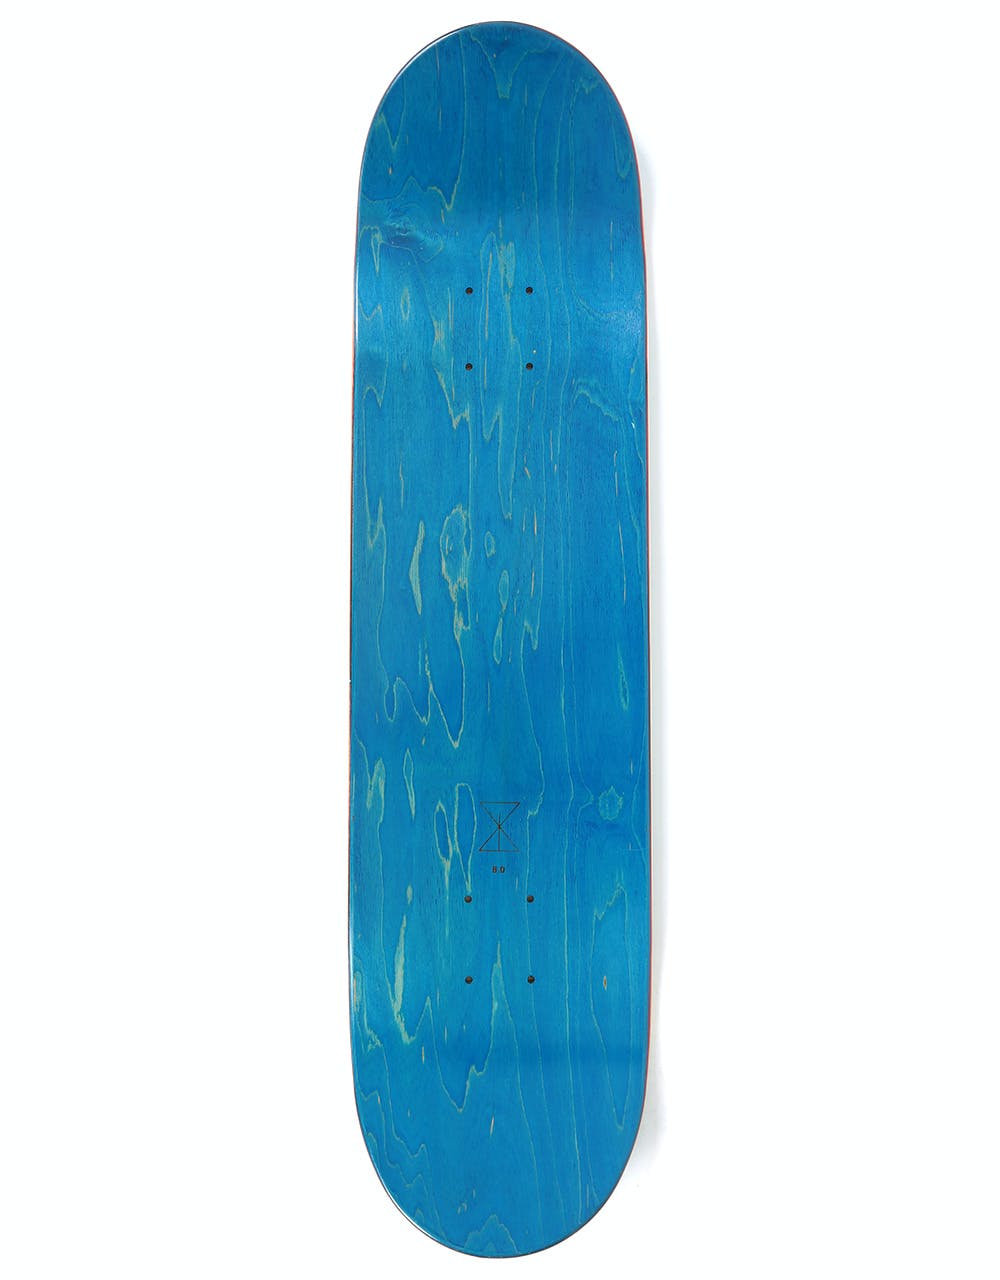 Sour Stripes Skateboard Deck - 8"